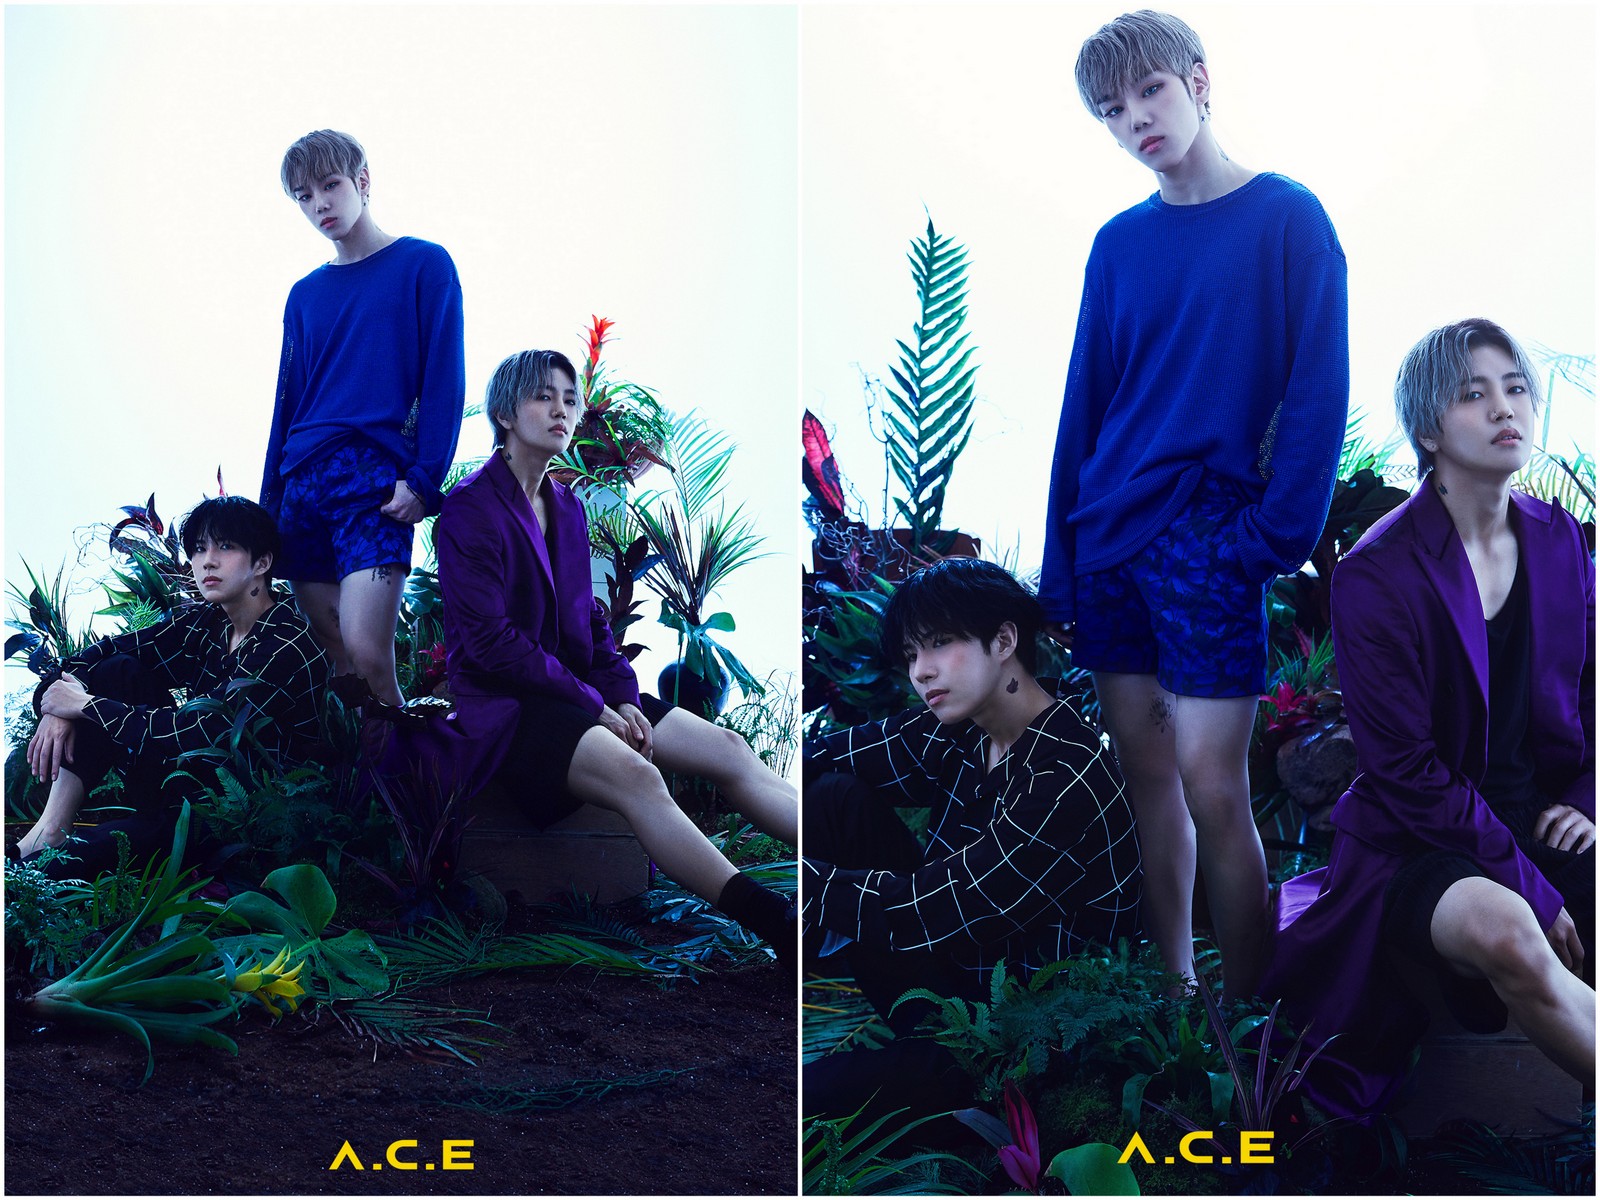 ace-unveils-comeback-concept-photos-for-4th-mini-album-hzjmthe-butterfly-phantasy-7